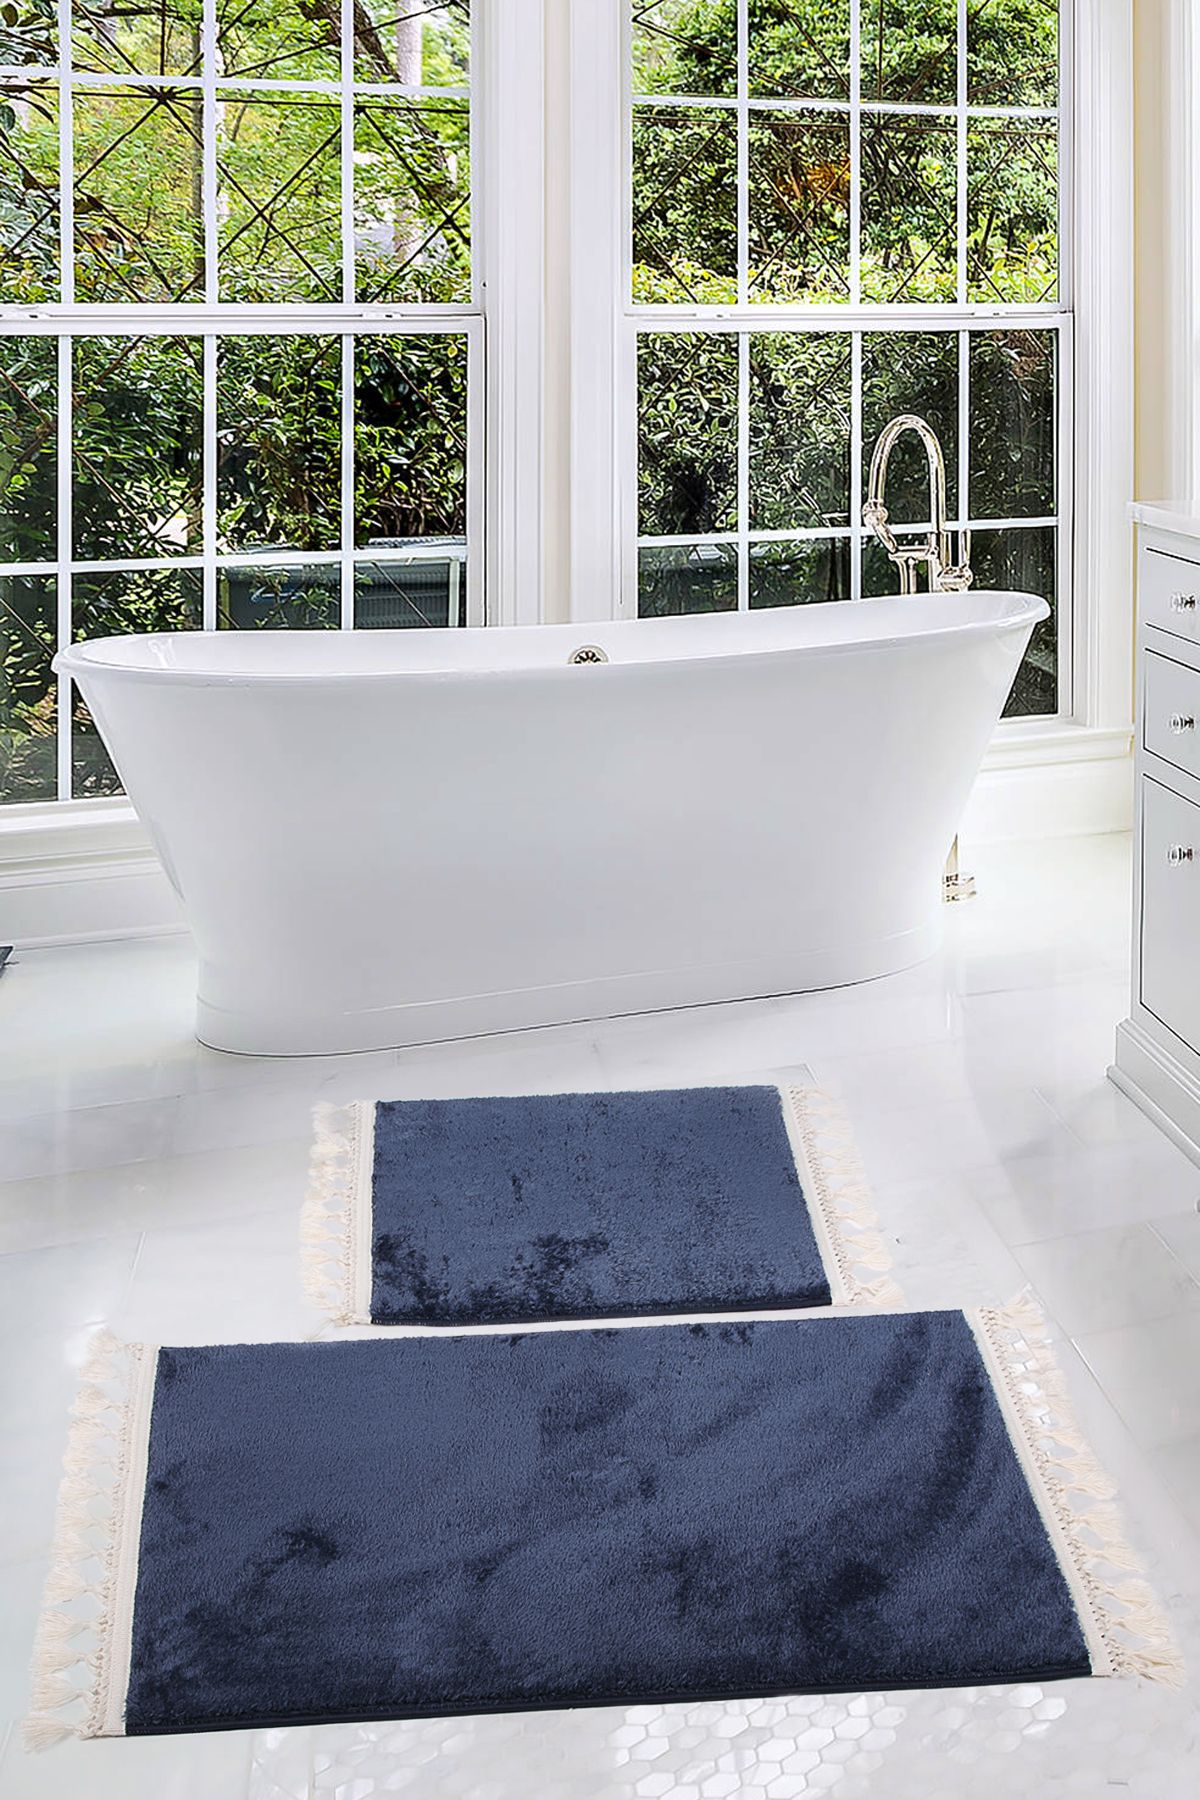 Bonny Home Relax Lacivert 60x100 + 50x60 cm 2'li Köşeli Ponpon Saçaklı Banyo Halısı Paspası Seti Kaymaz Tabanlı